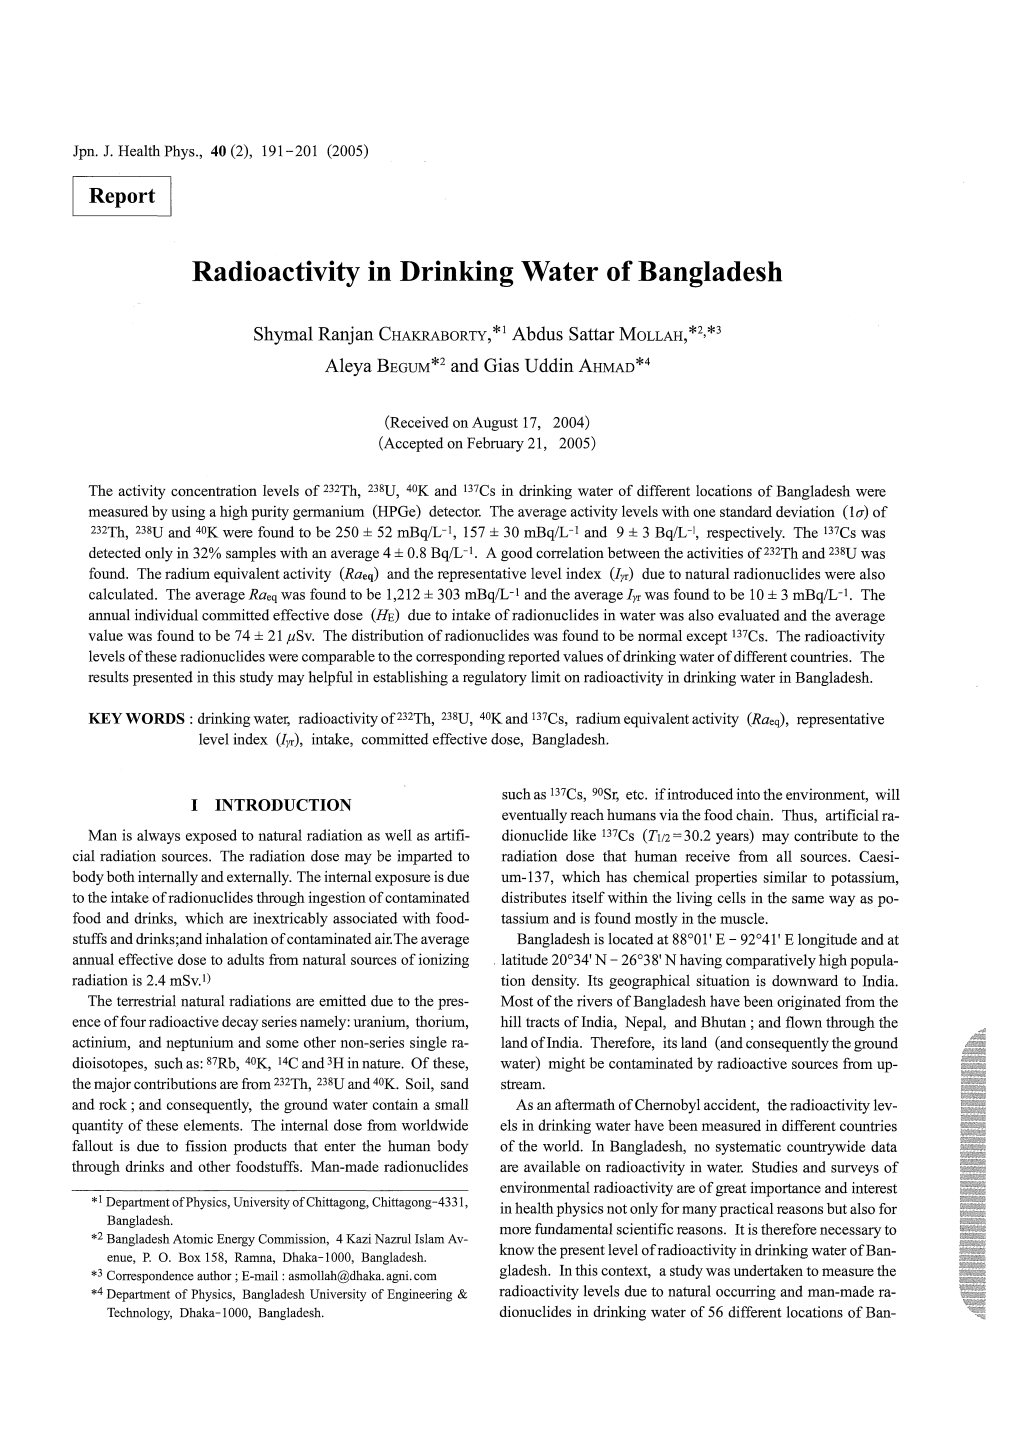 Radioactivity in Drinking Water of Bangladesh